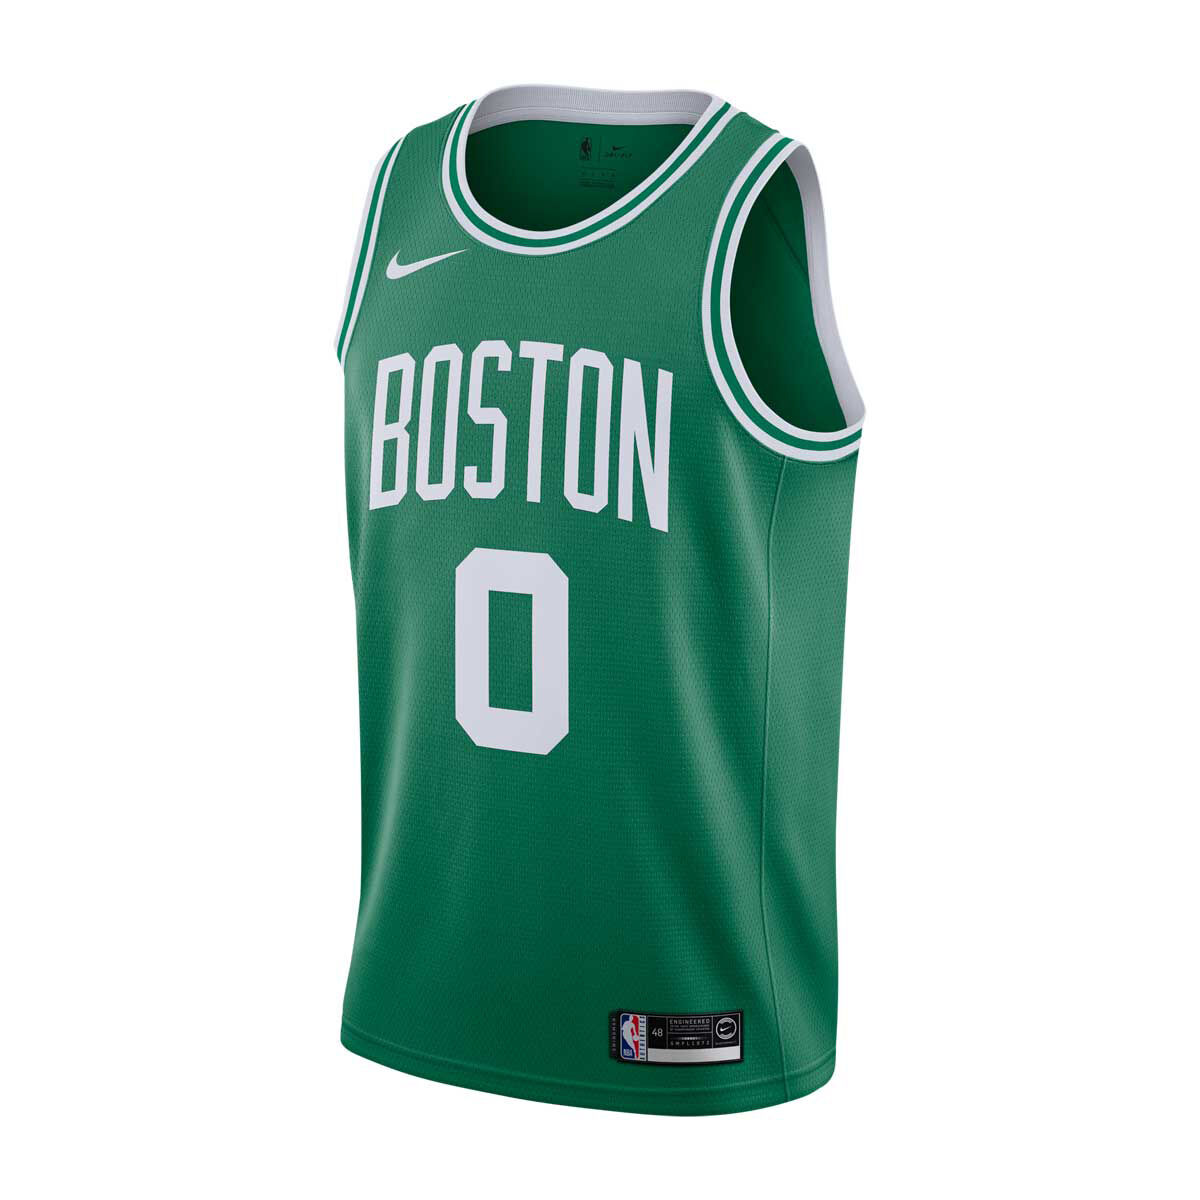 boston celtics jersey 2019